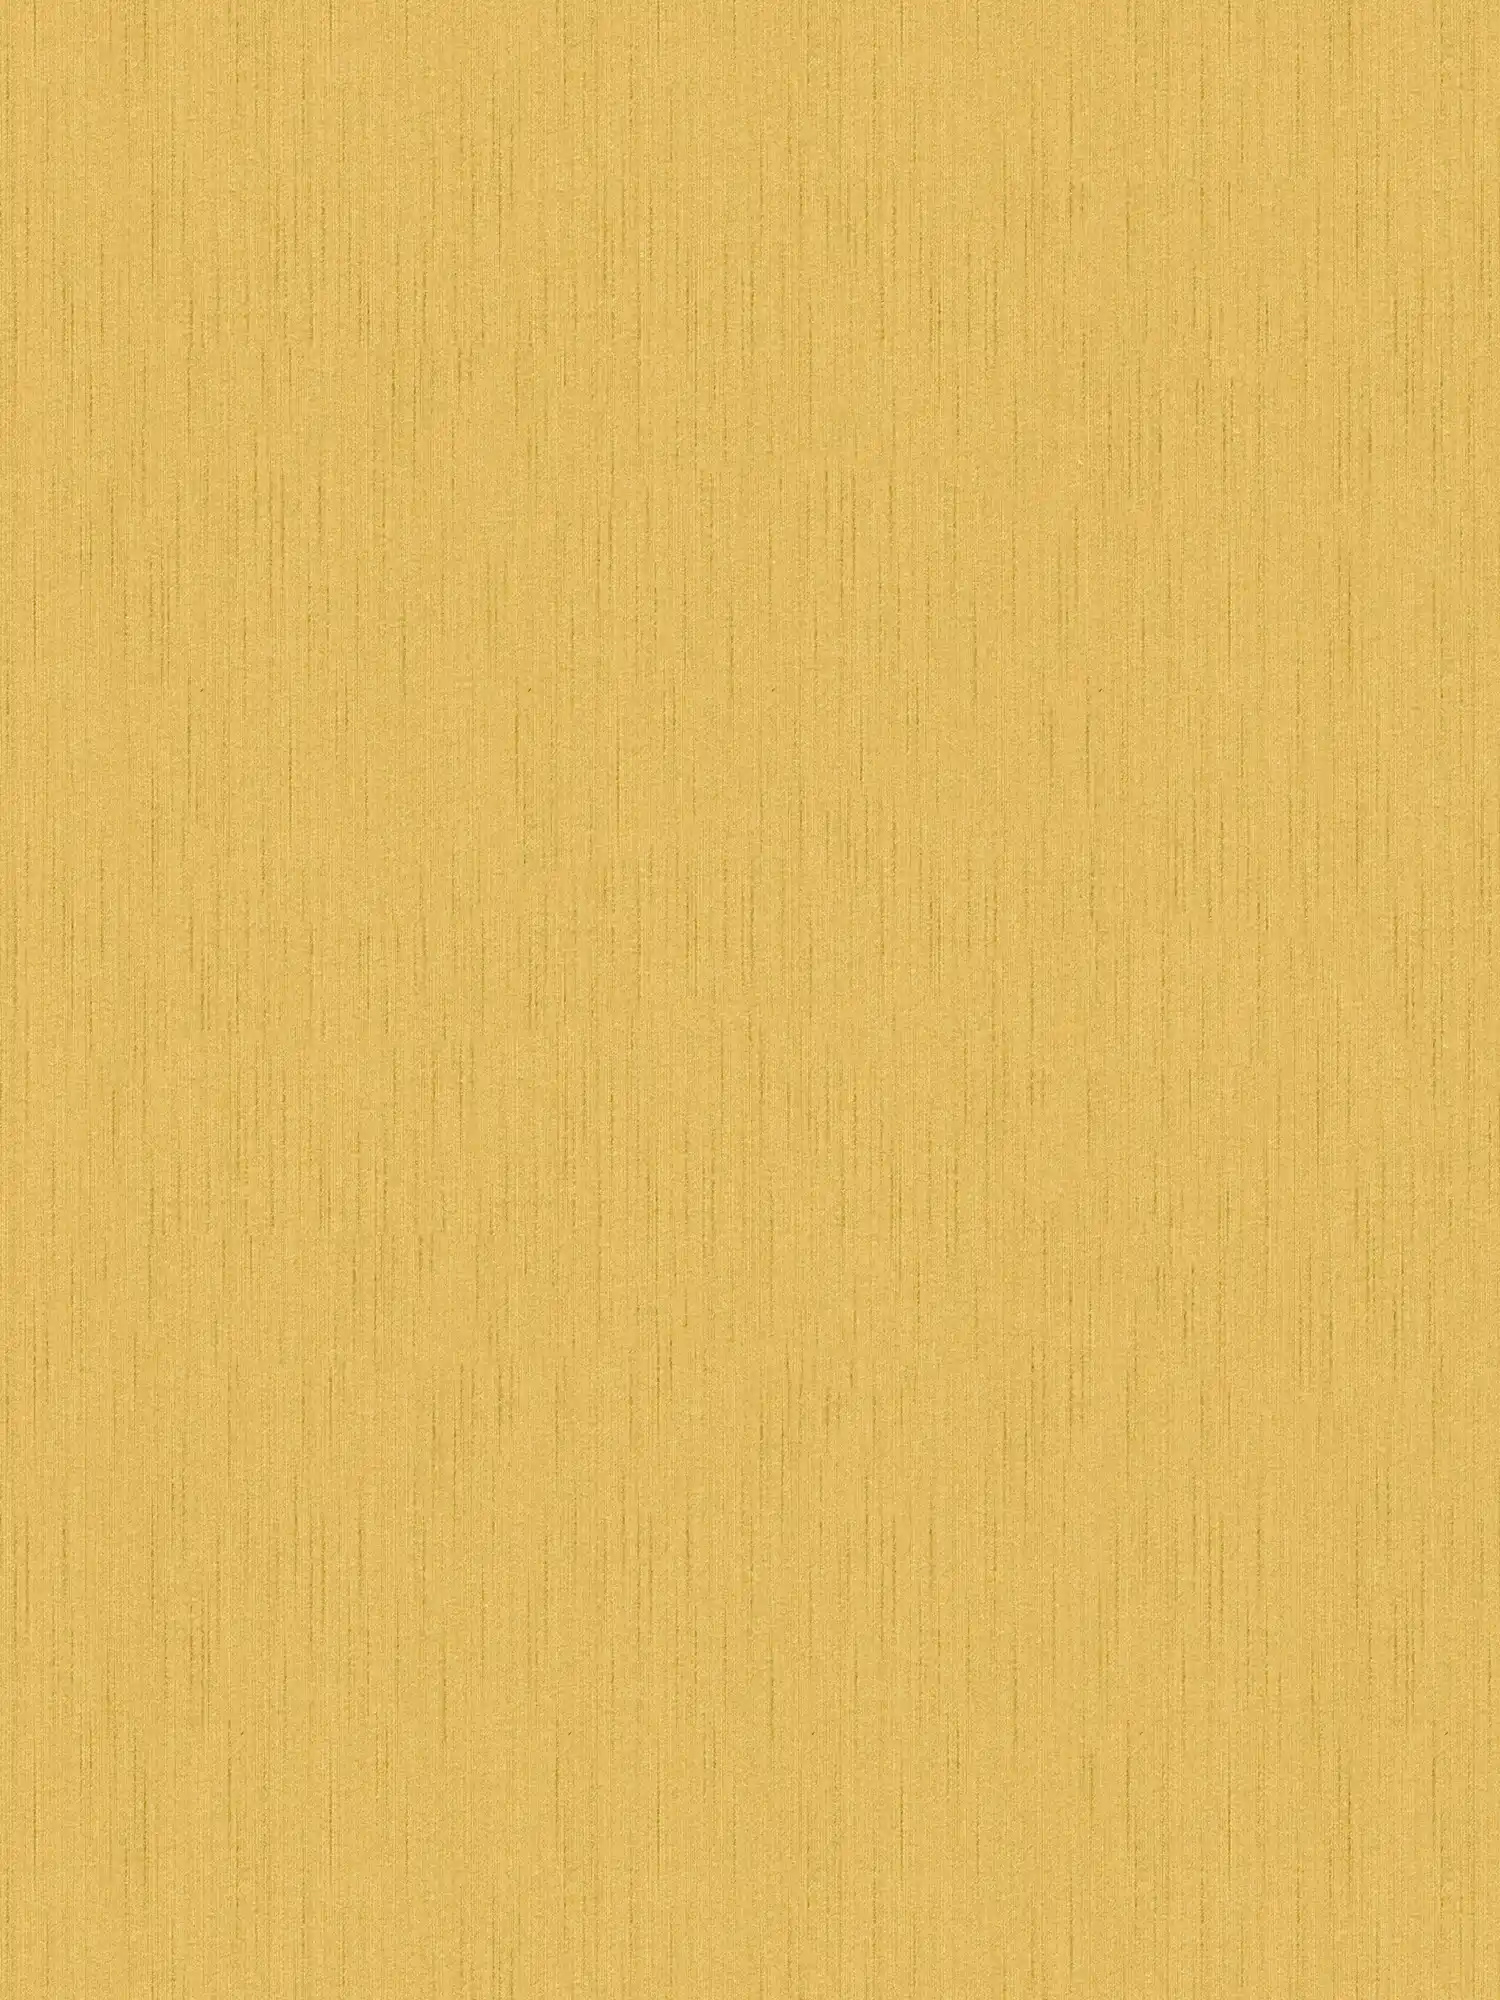 Mosterdgeel vliesbehang met gevlekt patroon - geel
